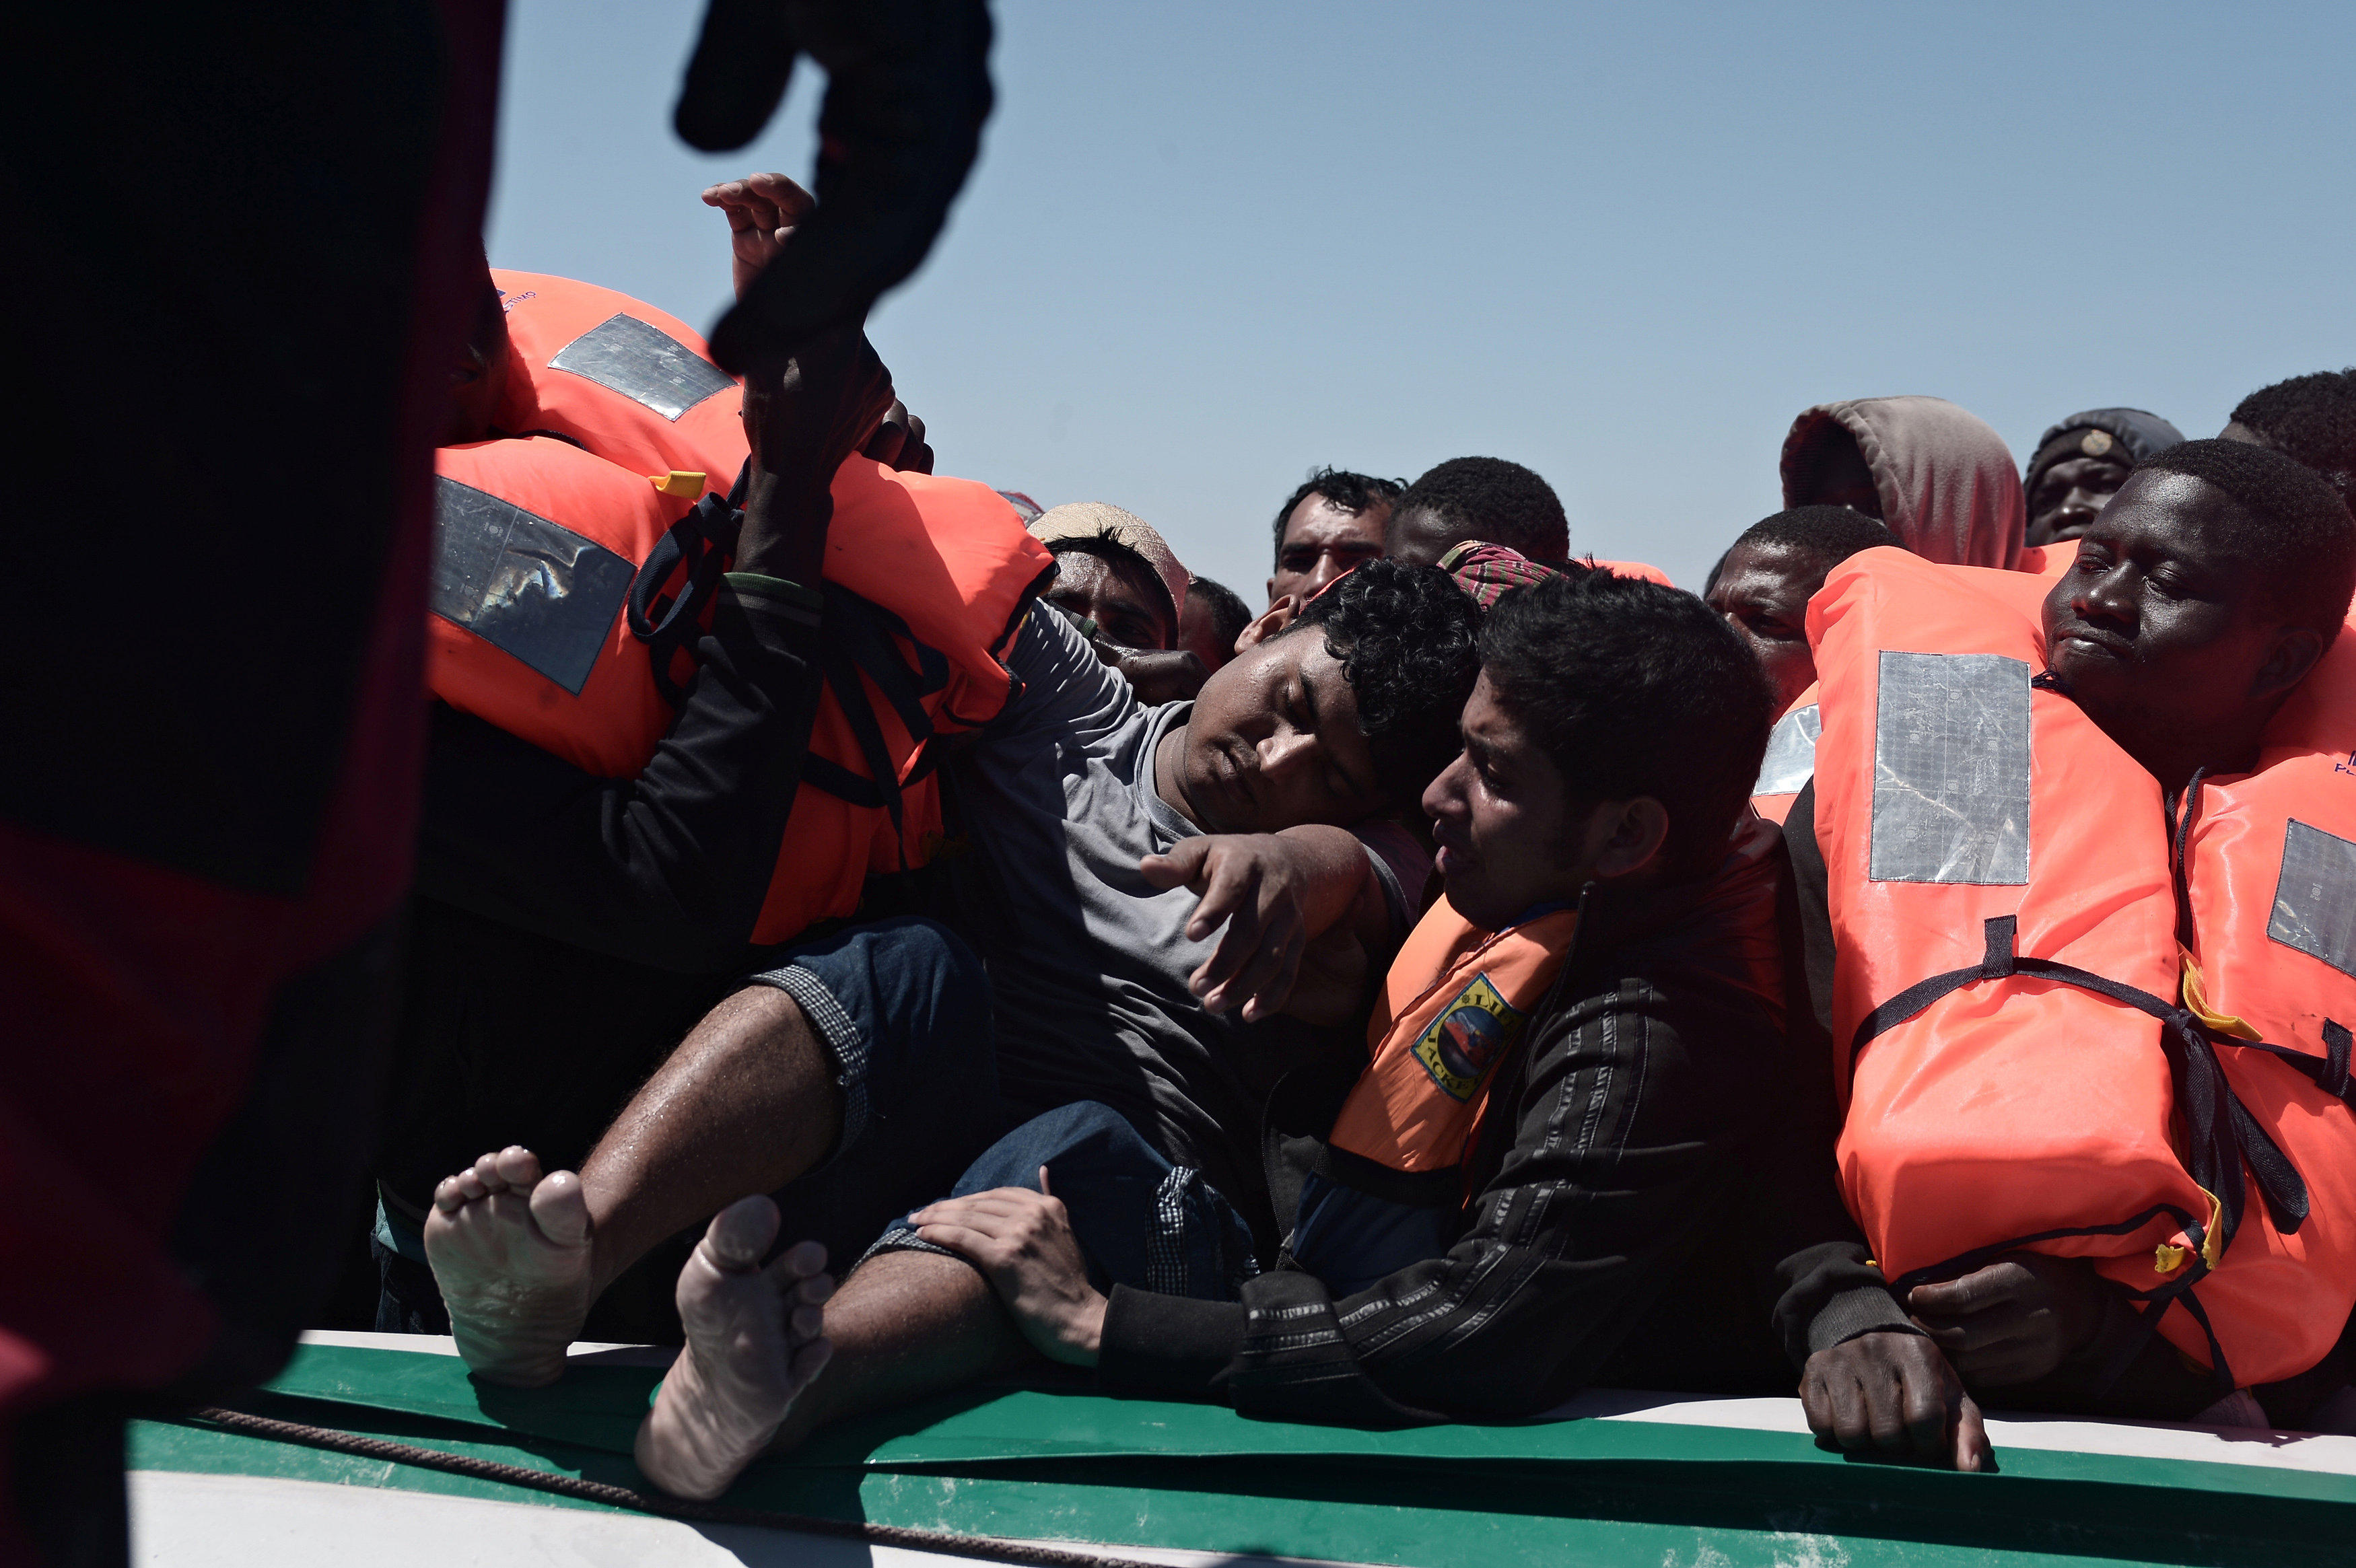 More than 2000 migrants rescued in Mediterranean Sea, Italian ... - CBS News